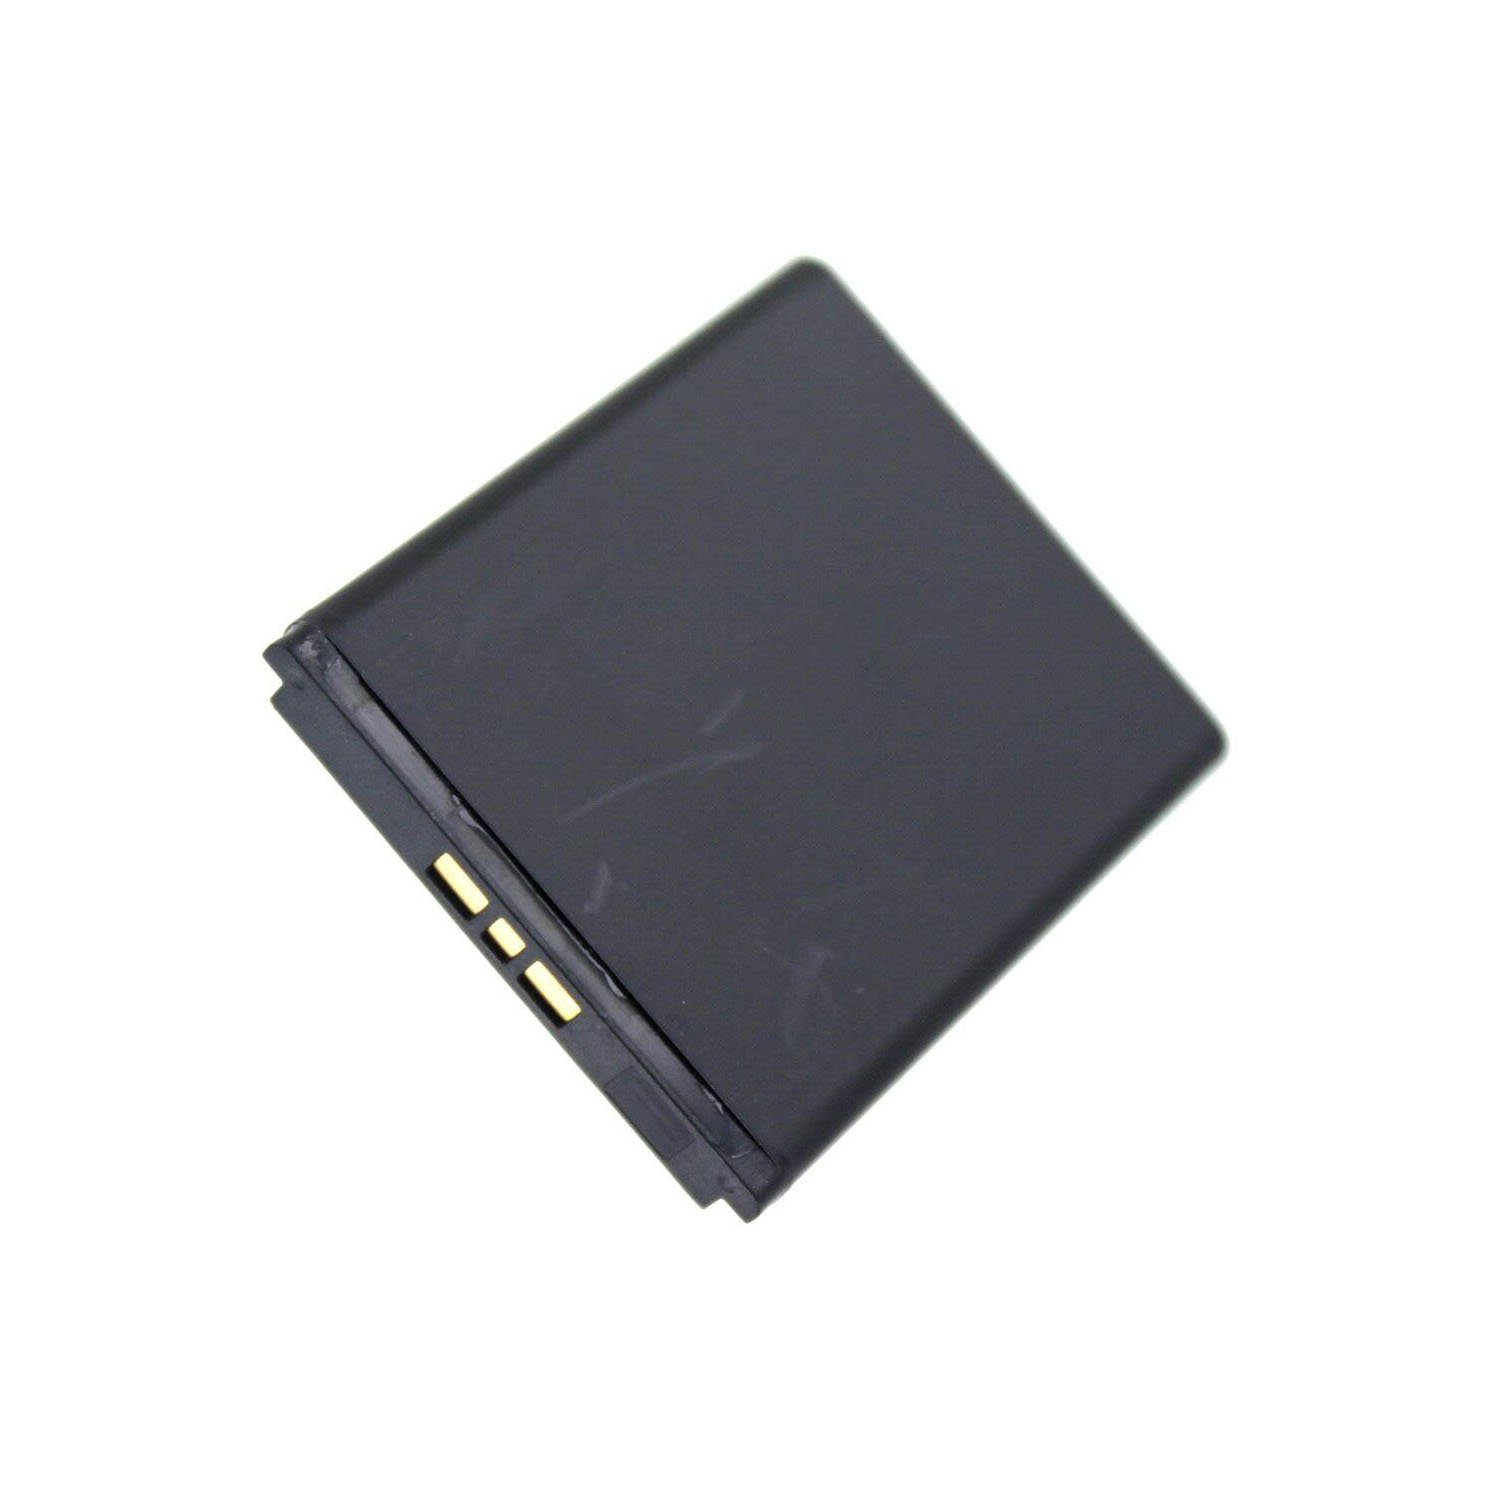 Sony Ericsson mit mAh MobiloTec (1 St) Akku kompatibel W890I Akku 860 Akku